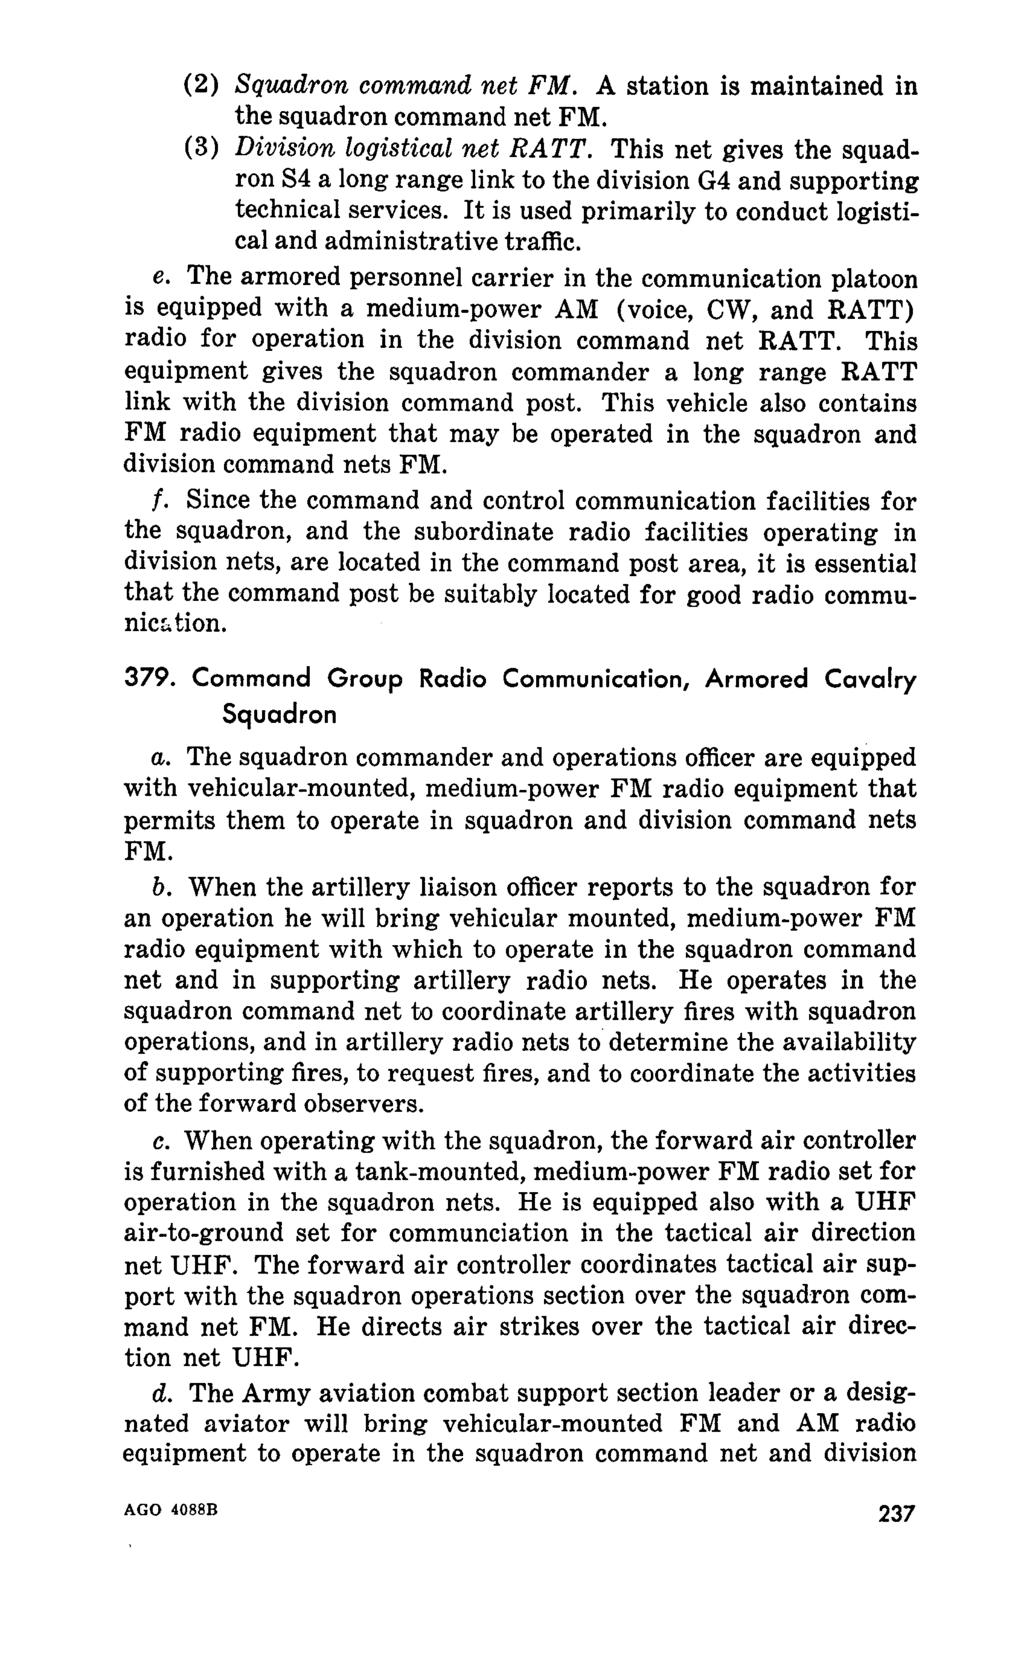 (2) Squadron command net FM. A station is maintained in the squadron command net FM. (3) Division logistical net RATT.